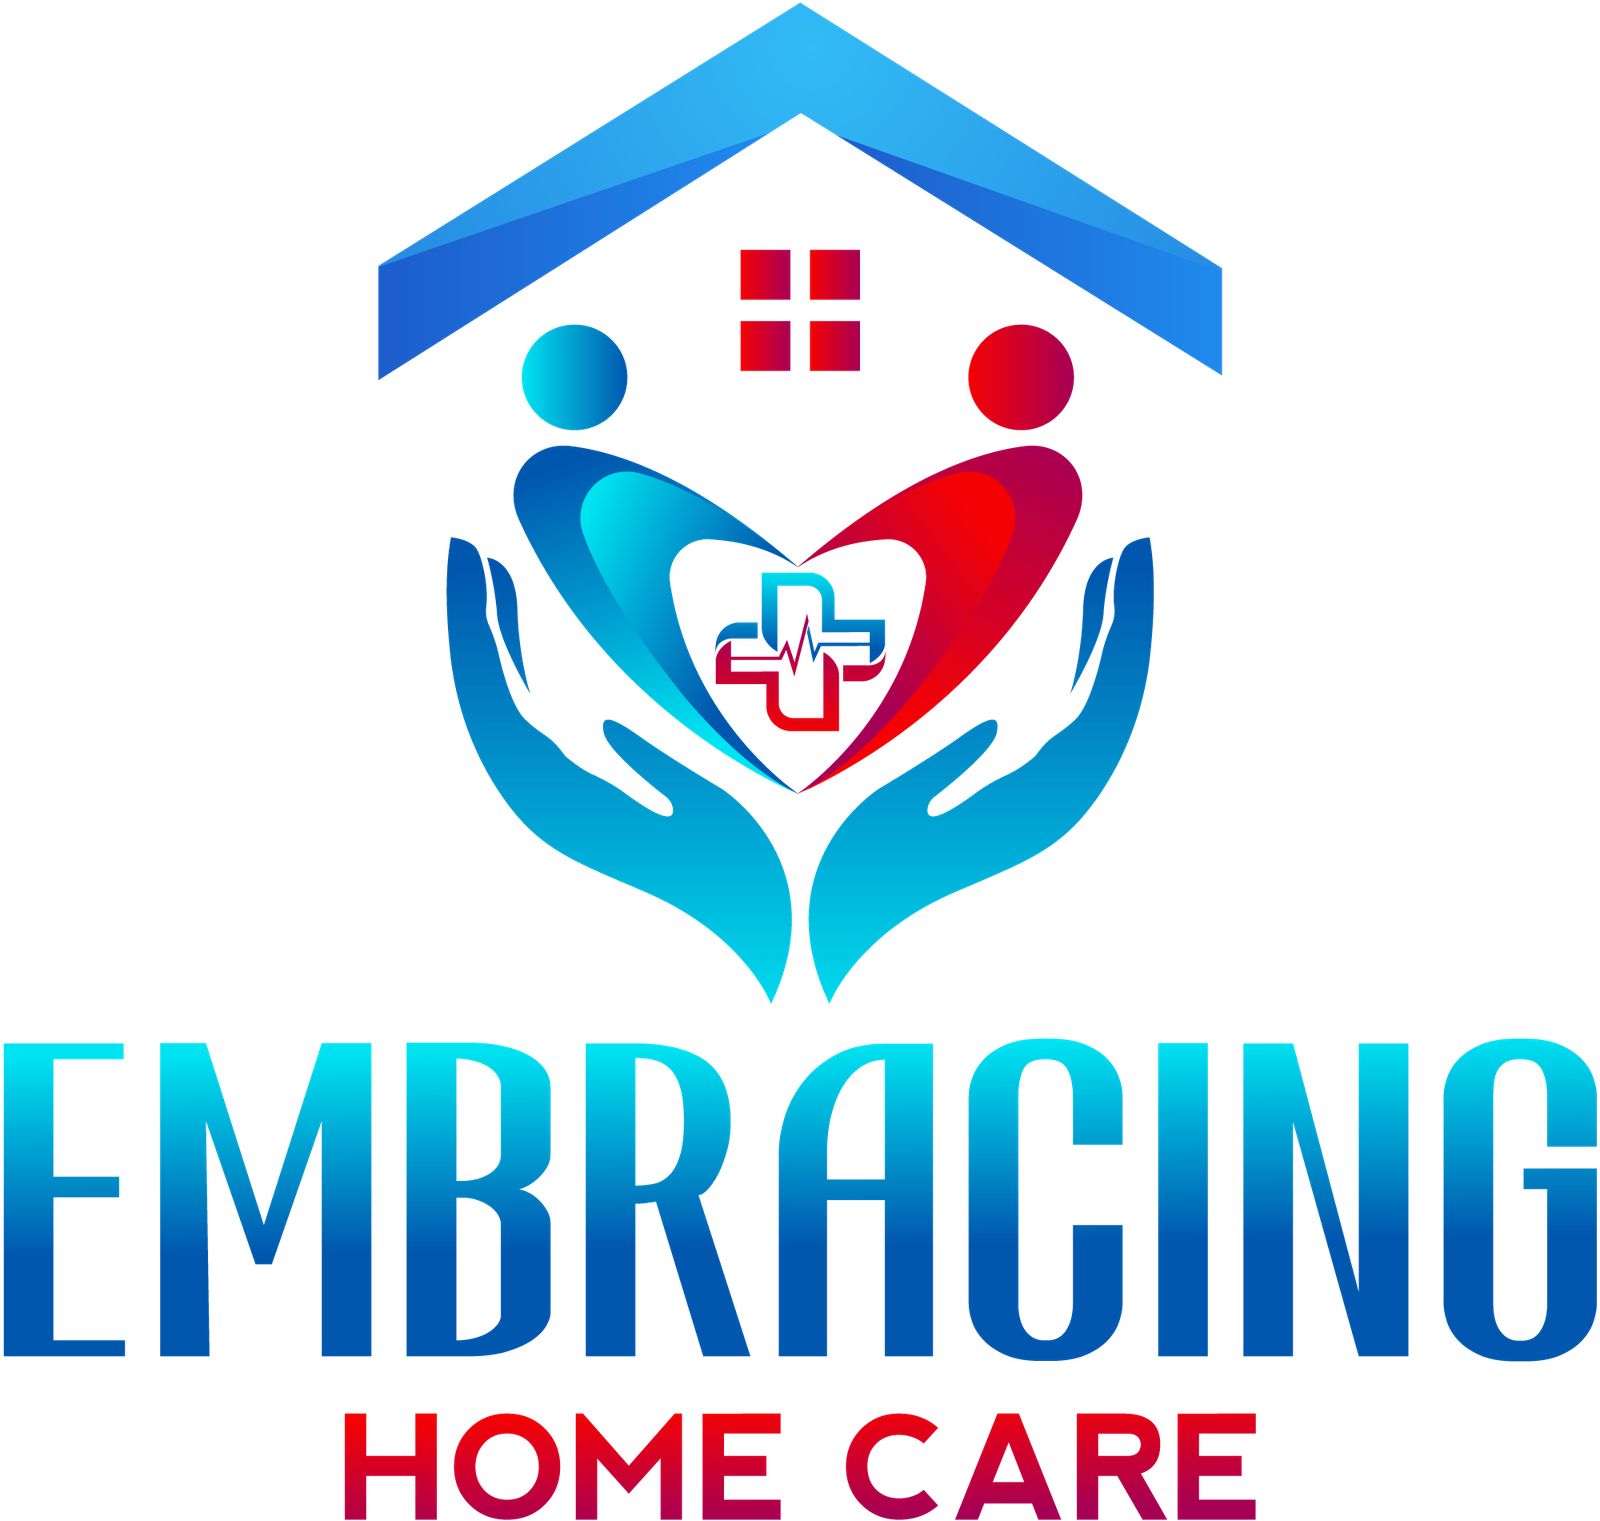 Embracing Home Care